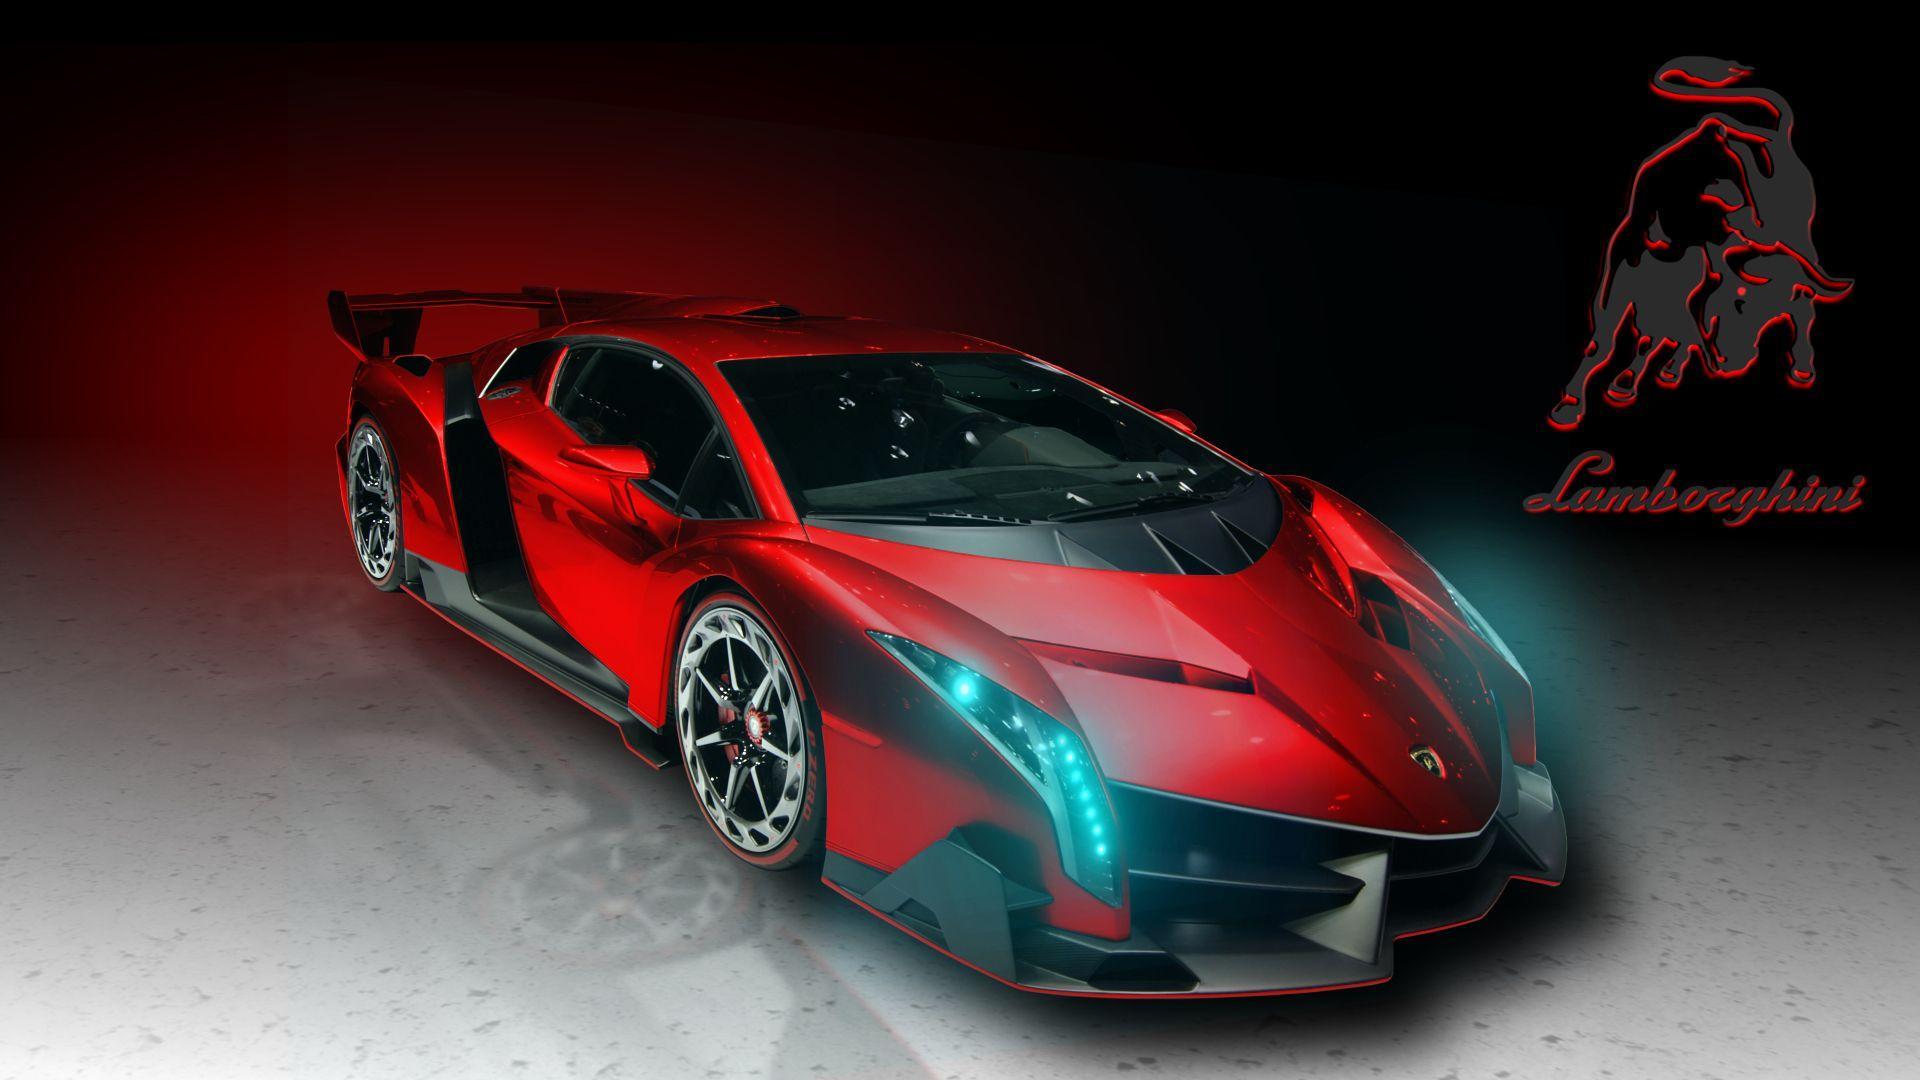 Lamborghini Veneno Wallpaper Free Download